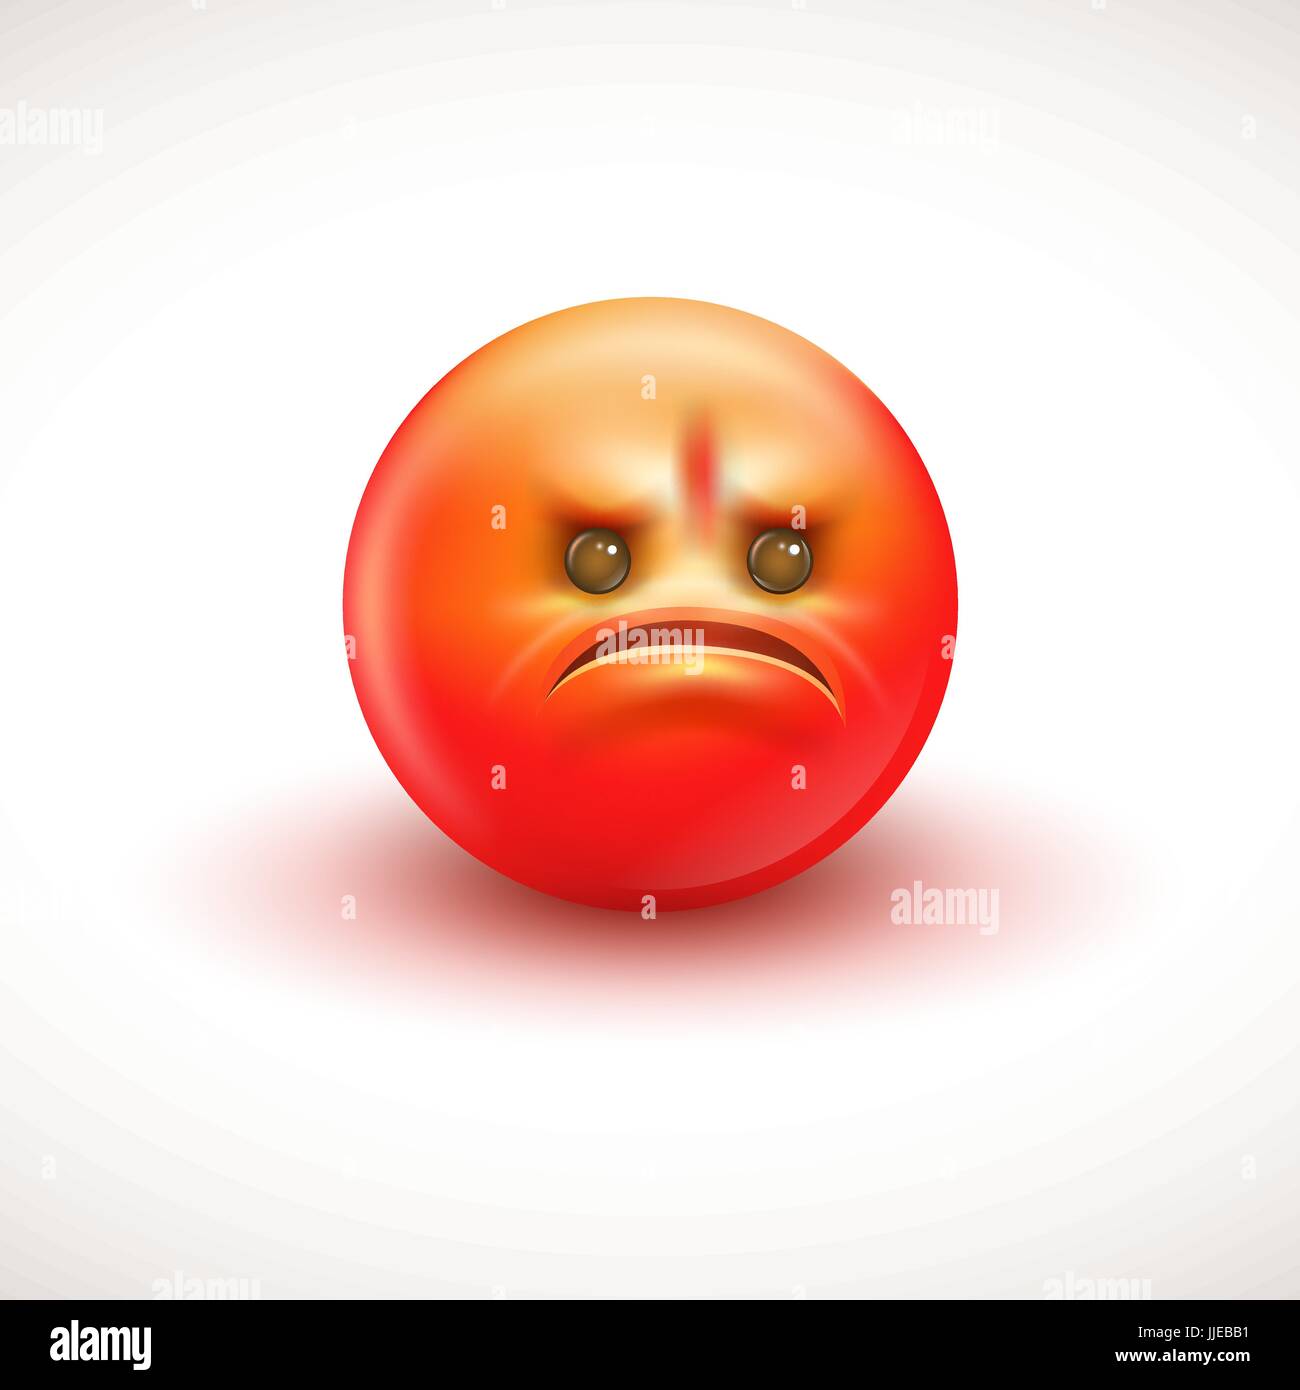 Angry Face Emoji Clipart Hd PNG, 3d Emoji Angry Face Illustration, Emoji,  3d, 3d Emoji PNG Image For Free Download